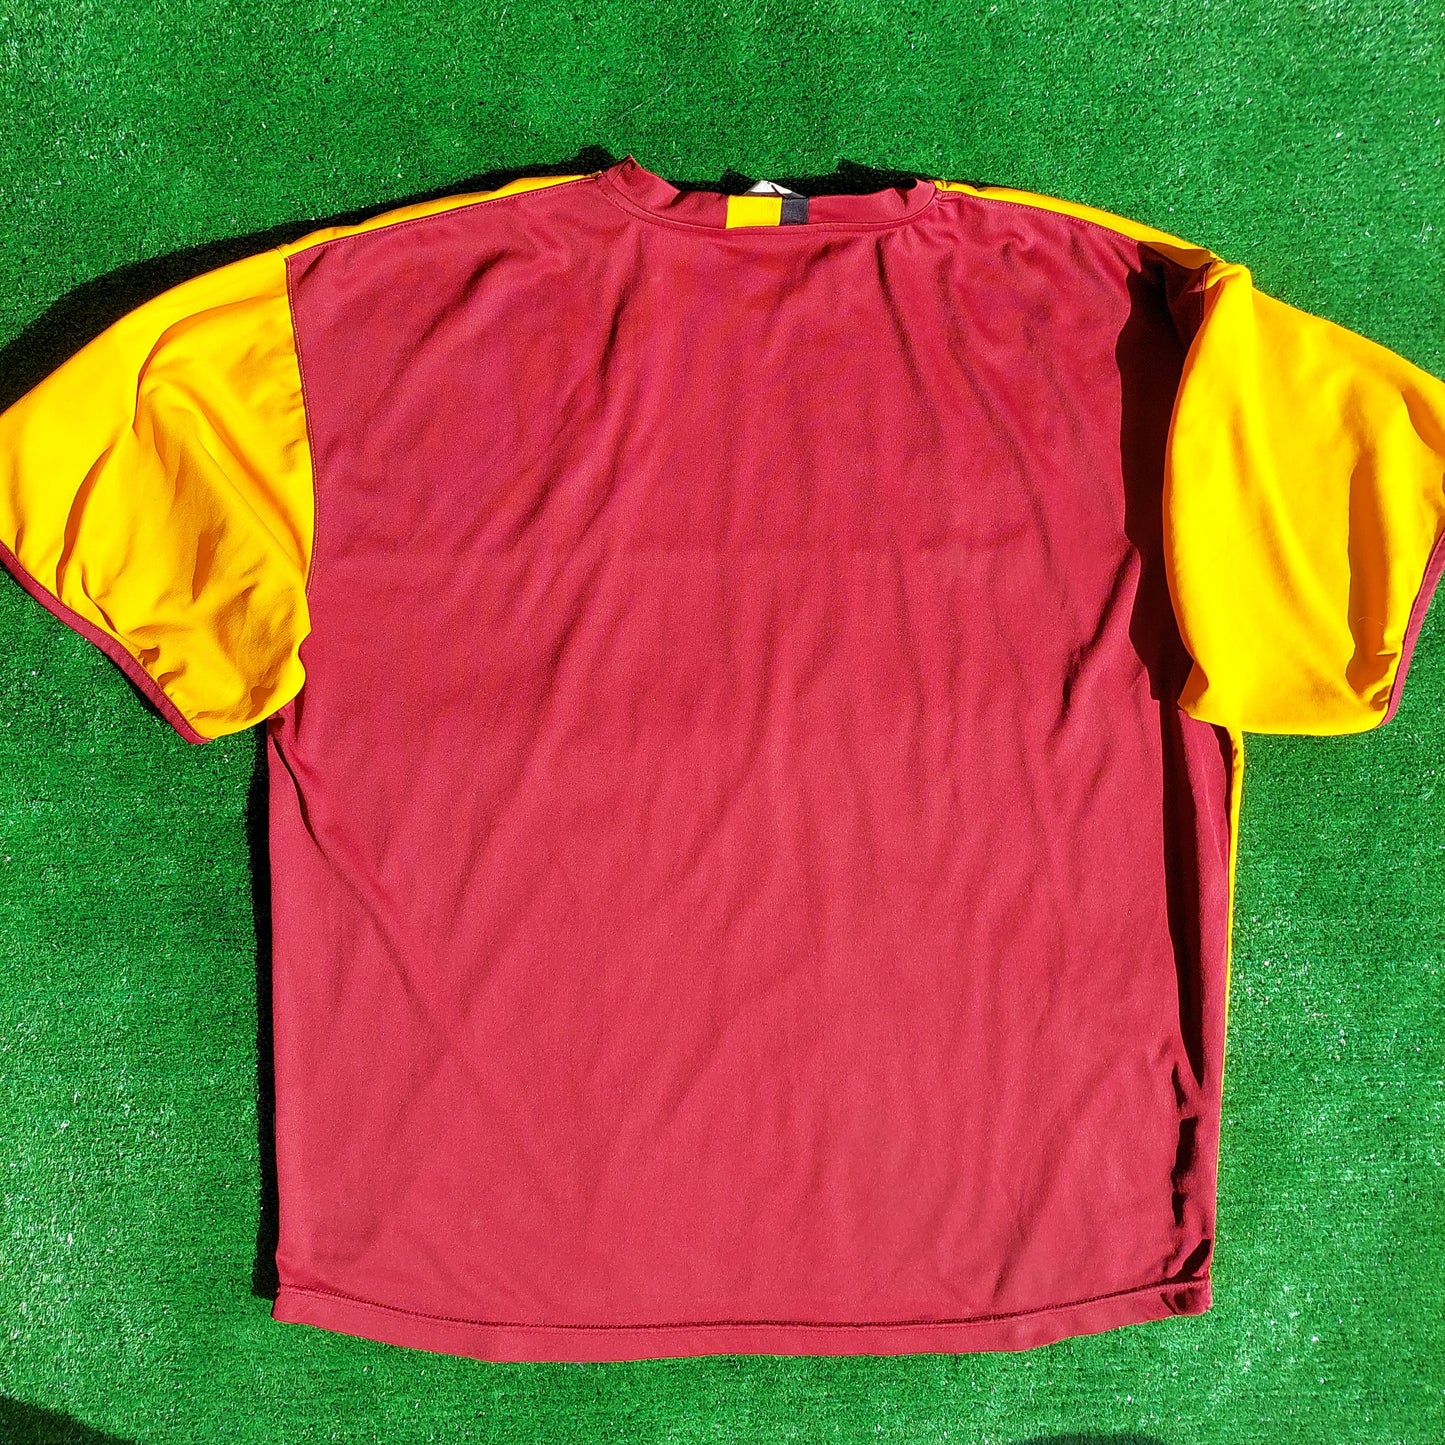 Bradford City 2005/06 Home Shirt (Very Good) - Size XL